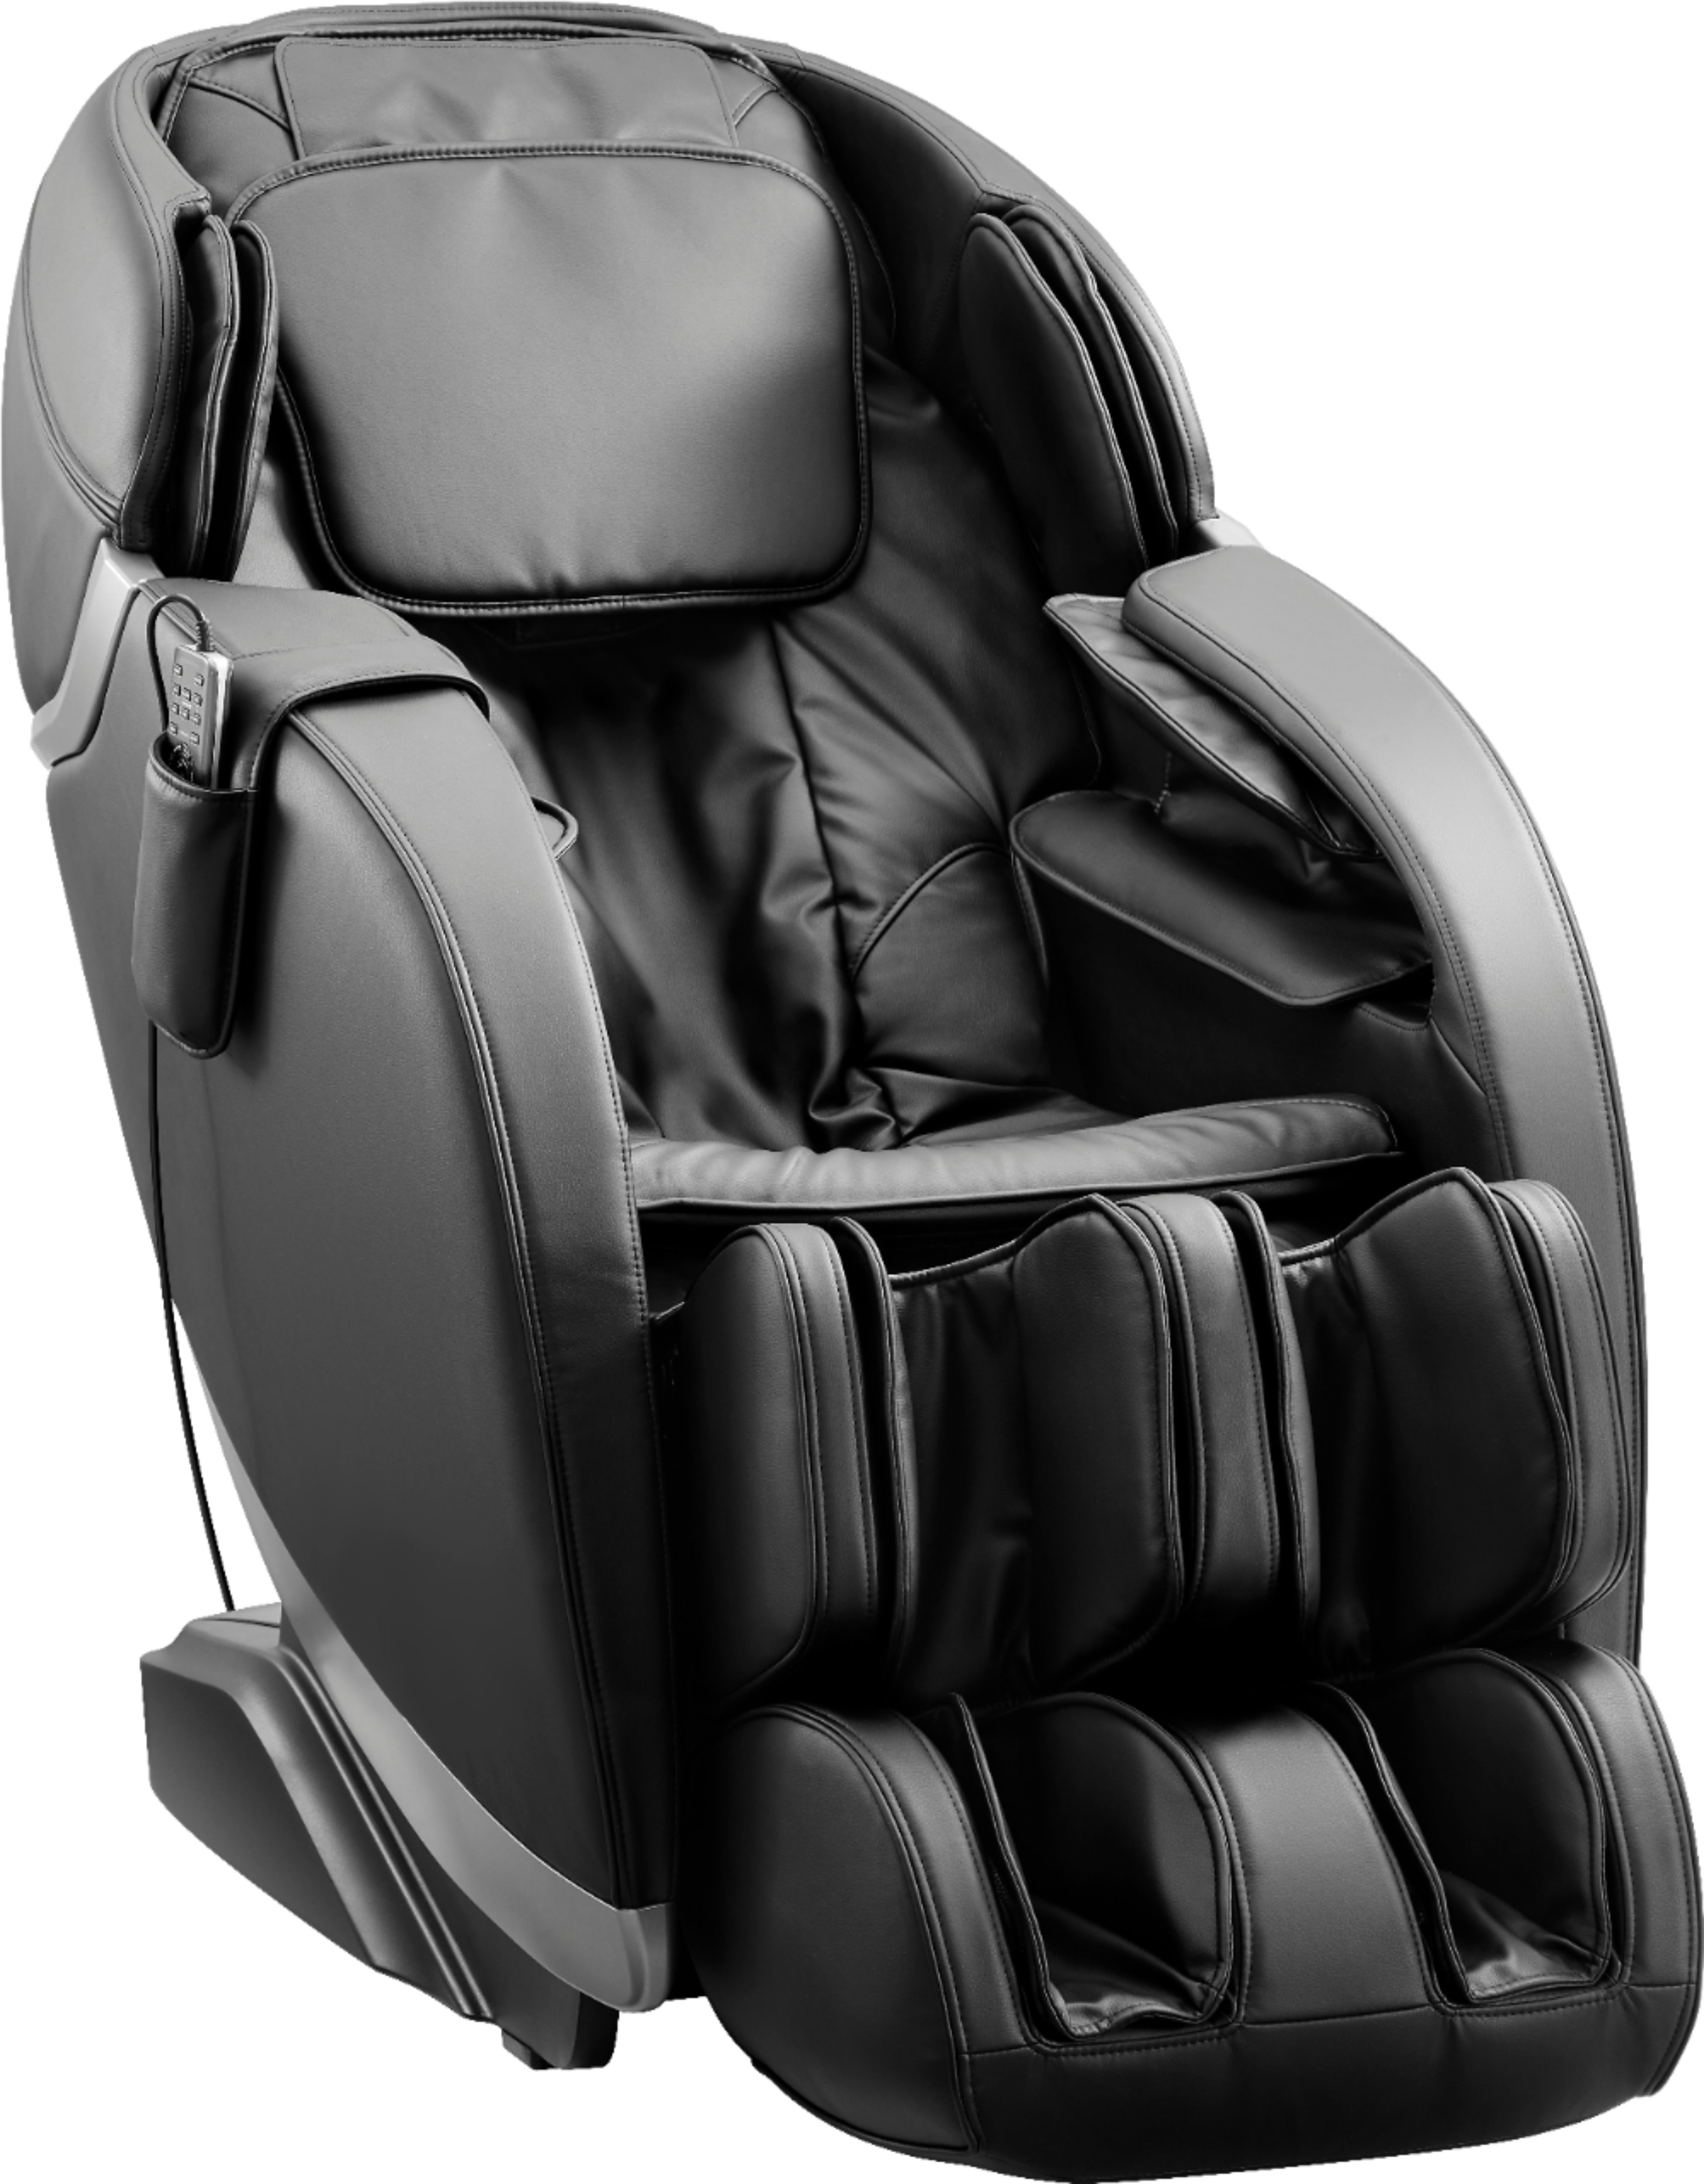 Insignia™ Zero Gravity Full Body Massage Chair Black with silver trim NS-MGC300BK1 - $999.99